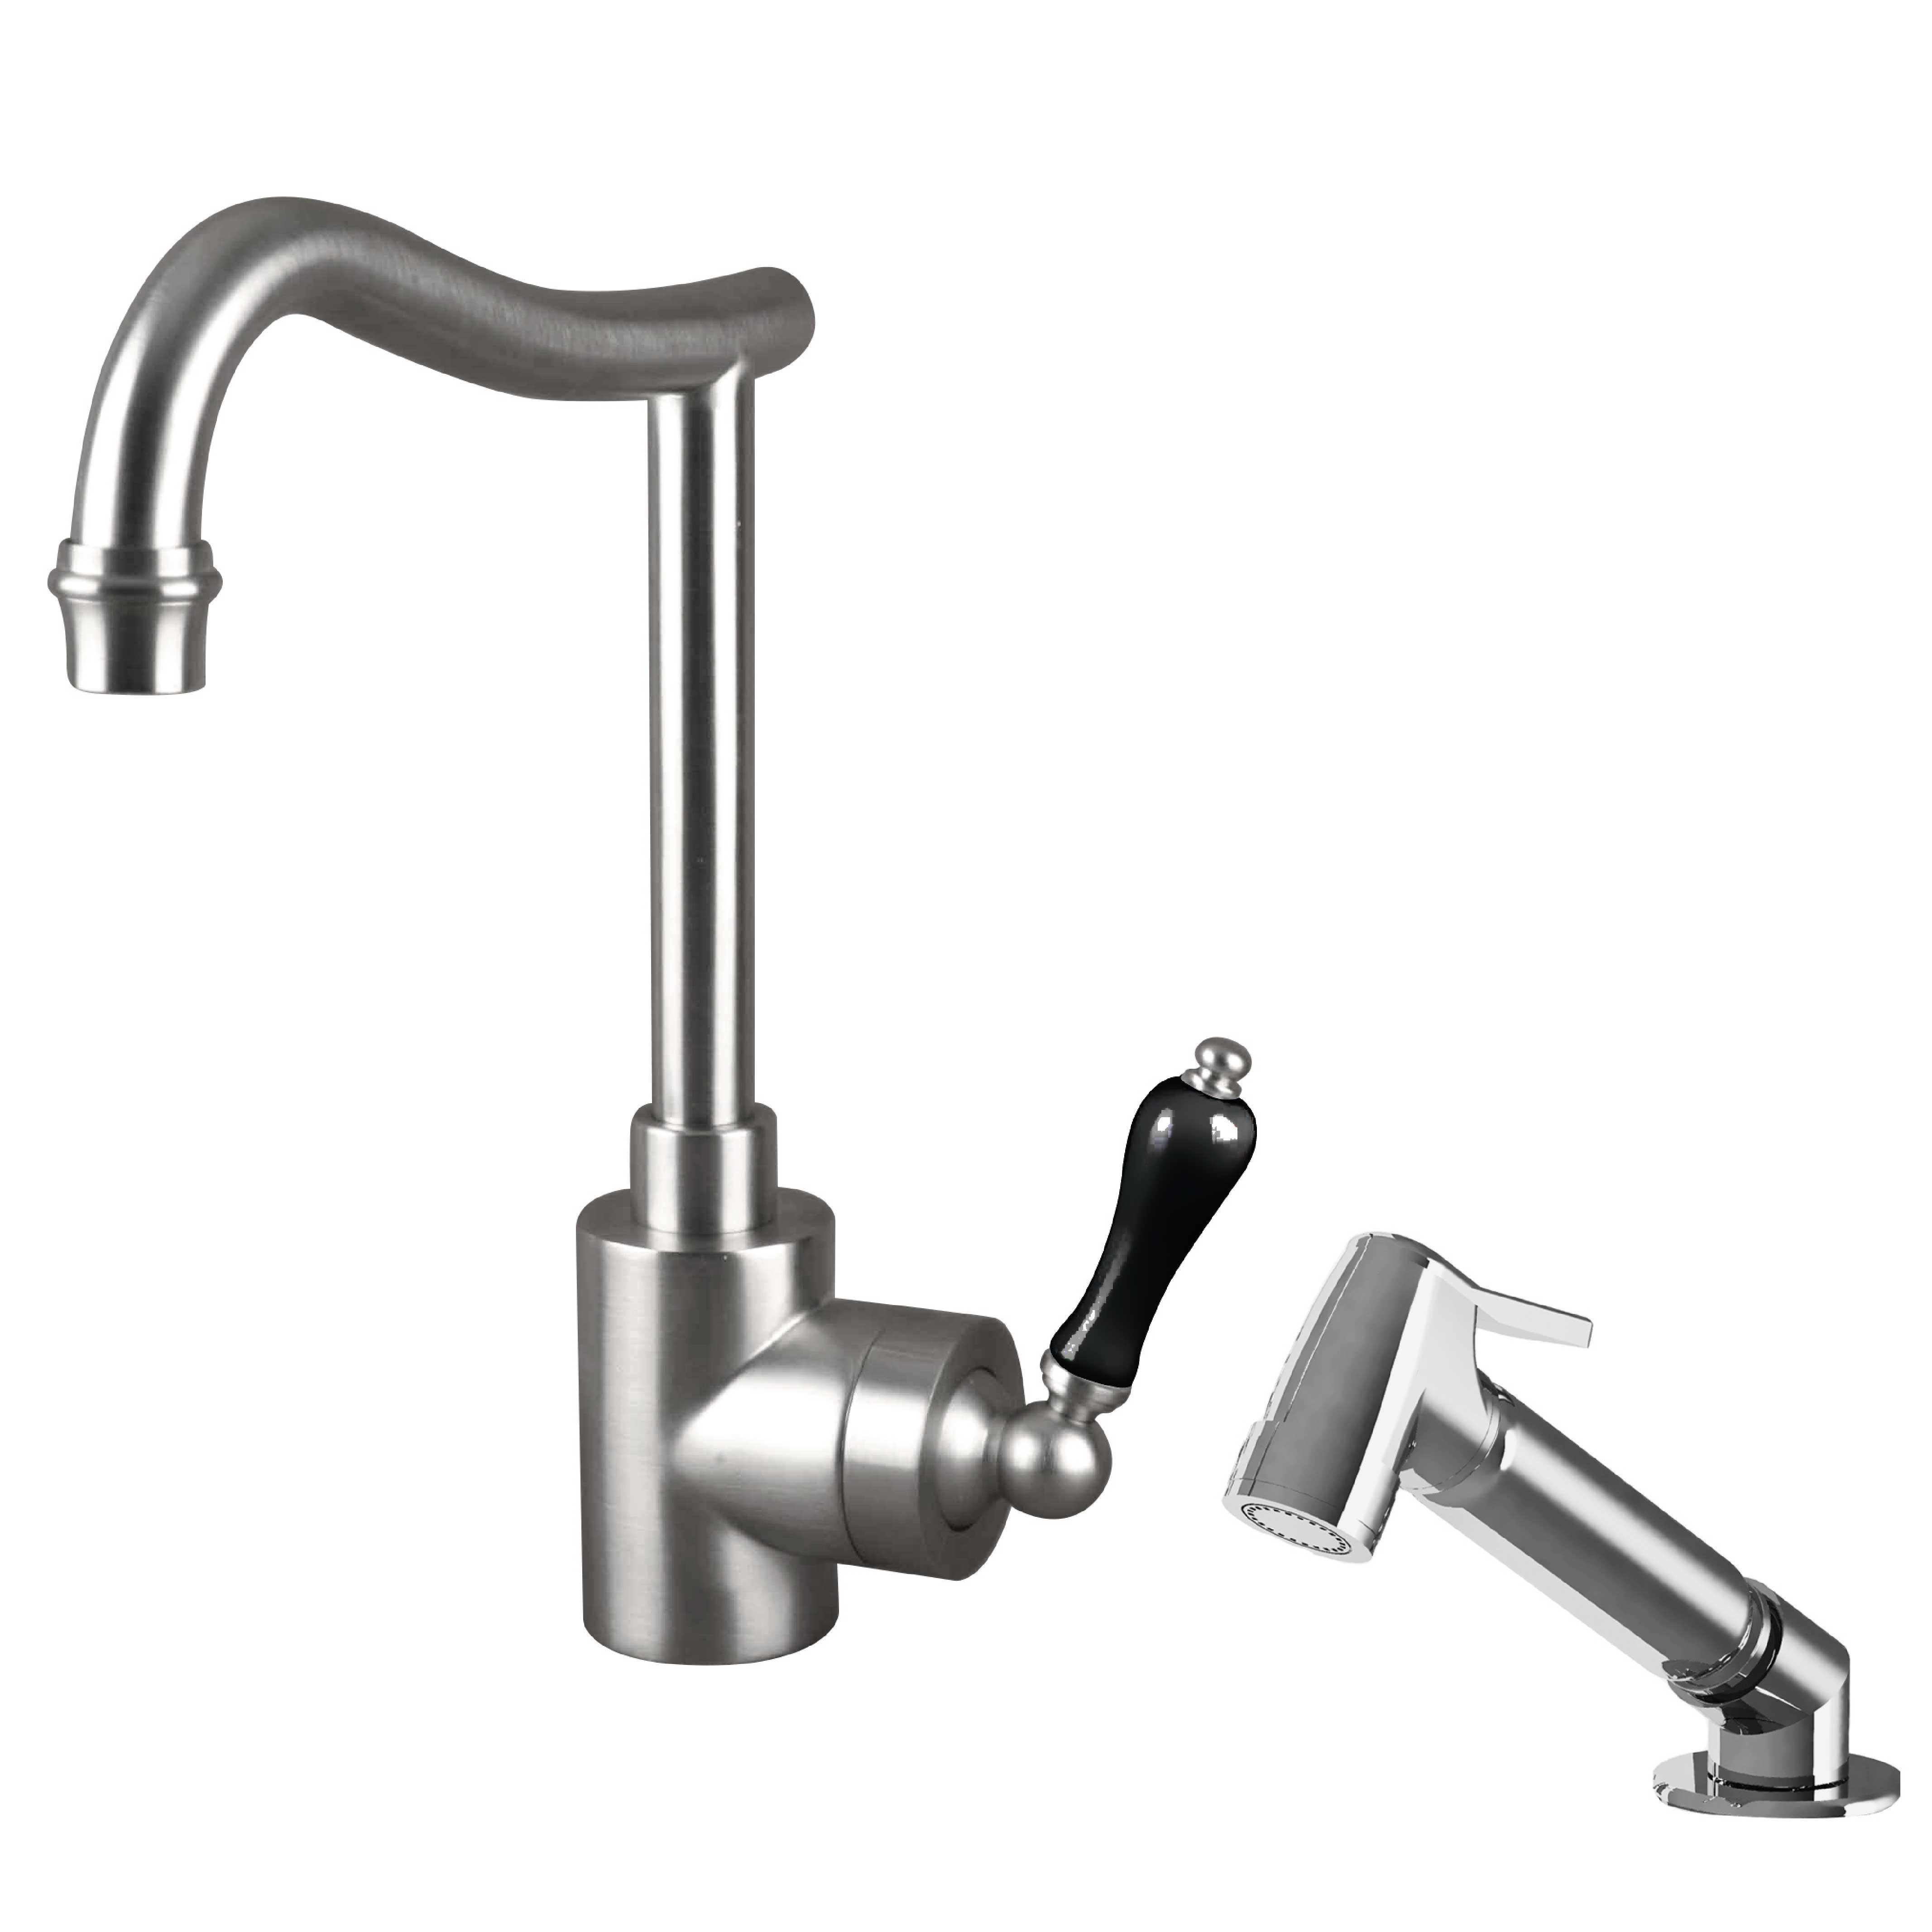 MKC-1BT5S Single-hole lever kitchen mixer & handspray